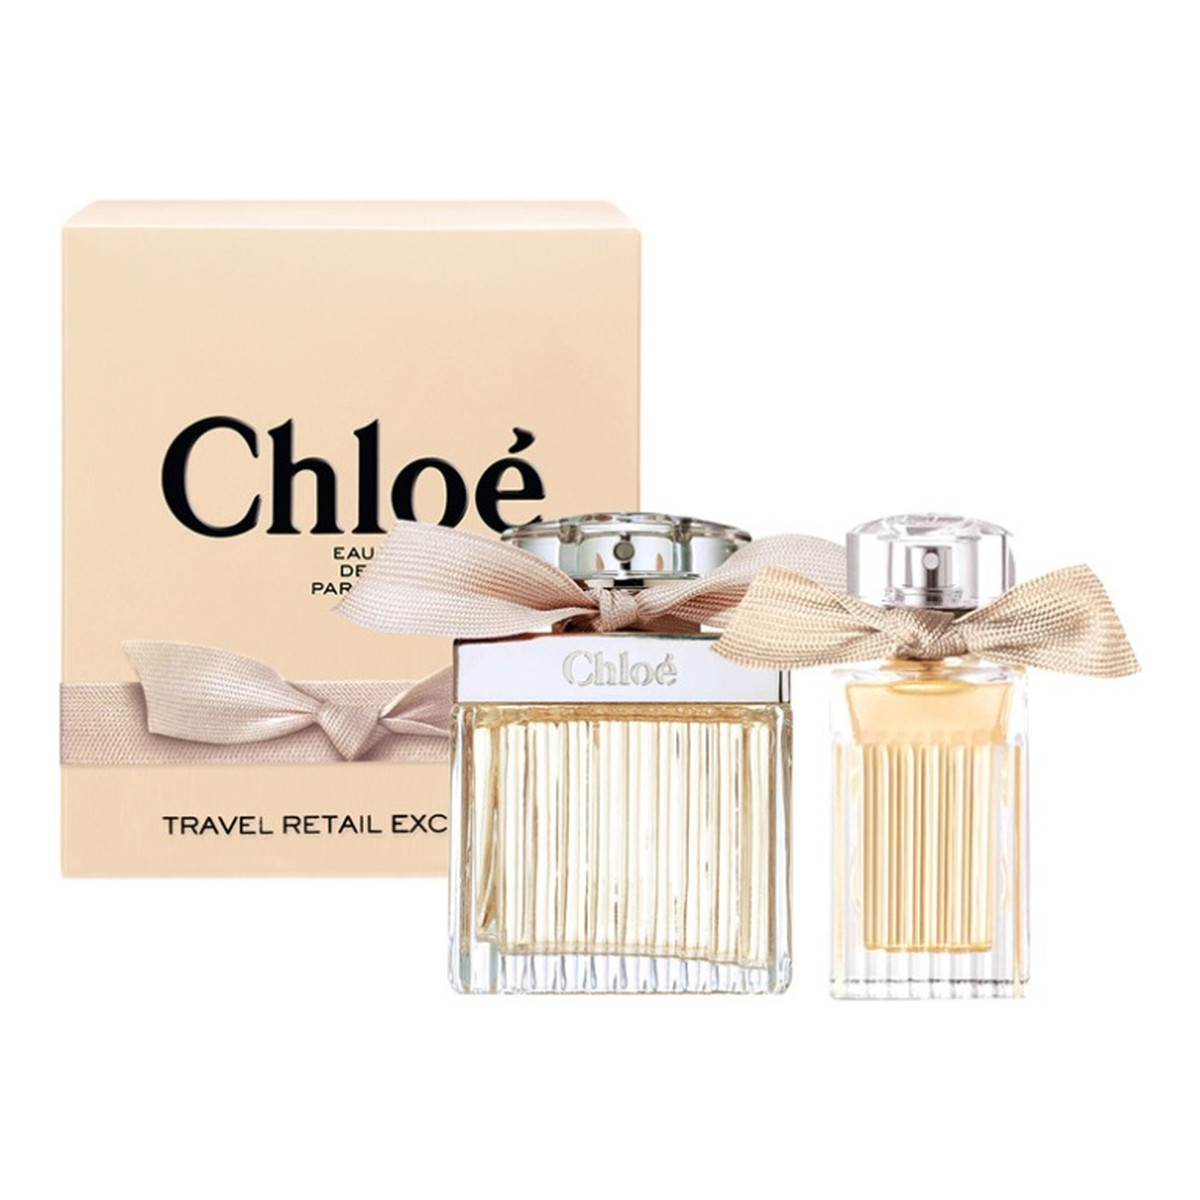 Chloe Travel Retail Exclusive zestaw (woda perfumowana 75ml + woda perfumowana 20ml) 20ml